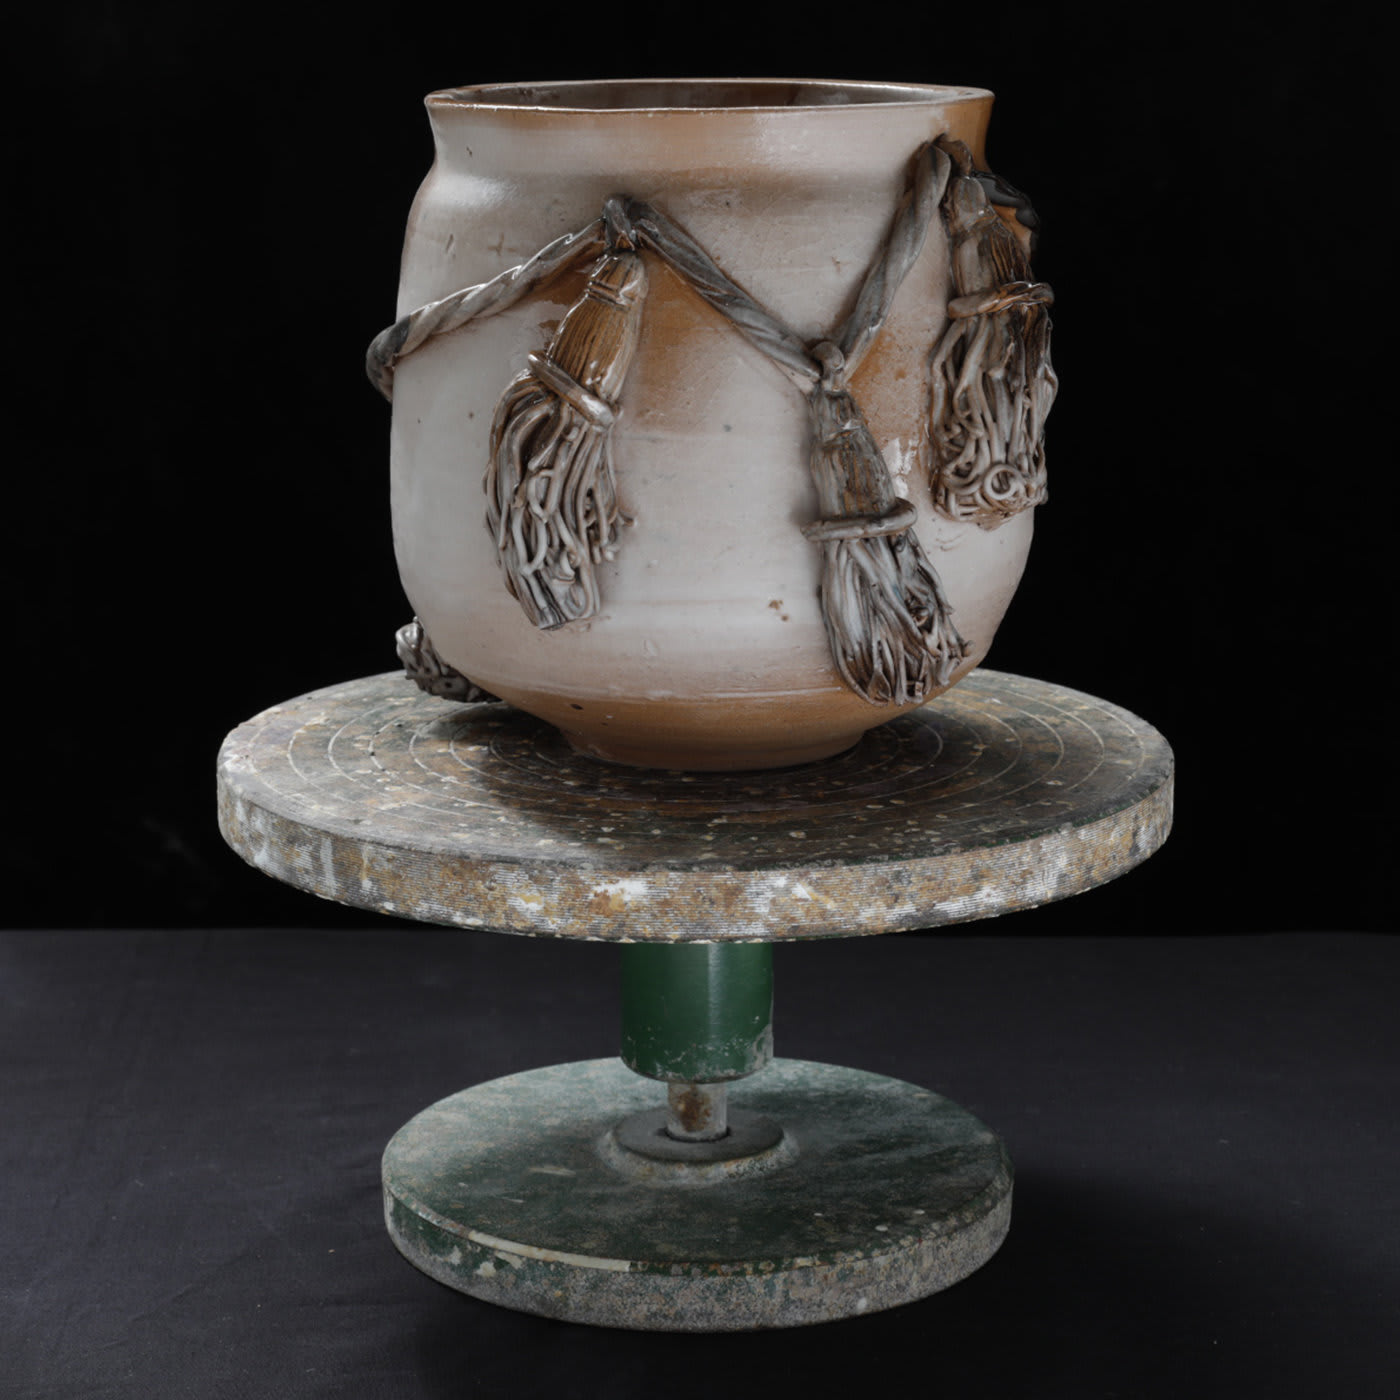 Vase With Tassels #7 - Sebastiano Leta